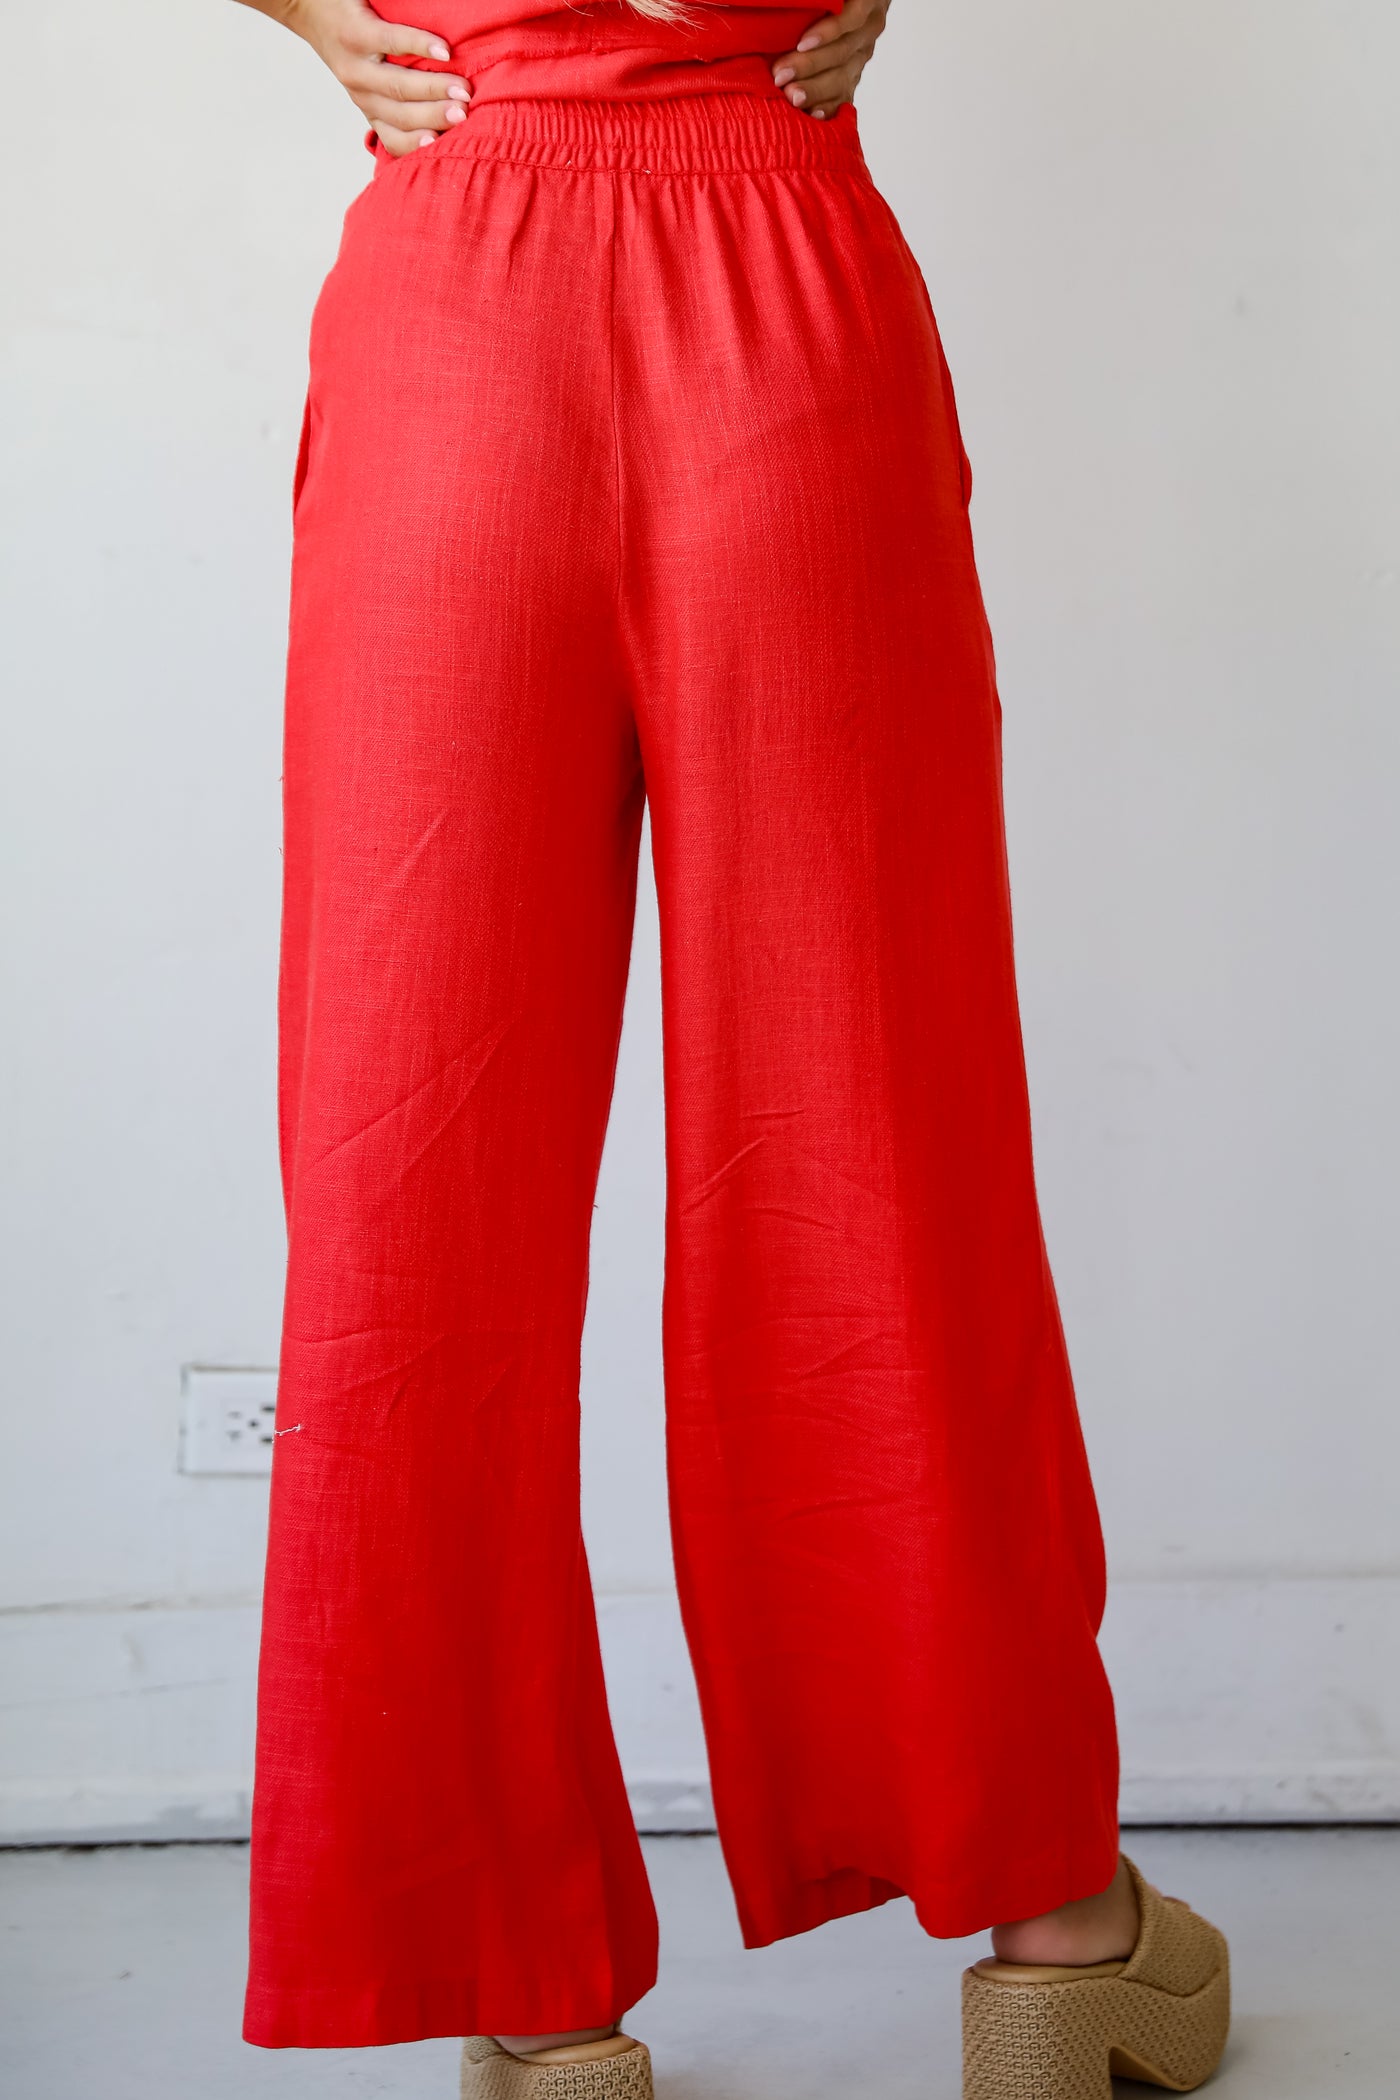 womens red linen pants